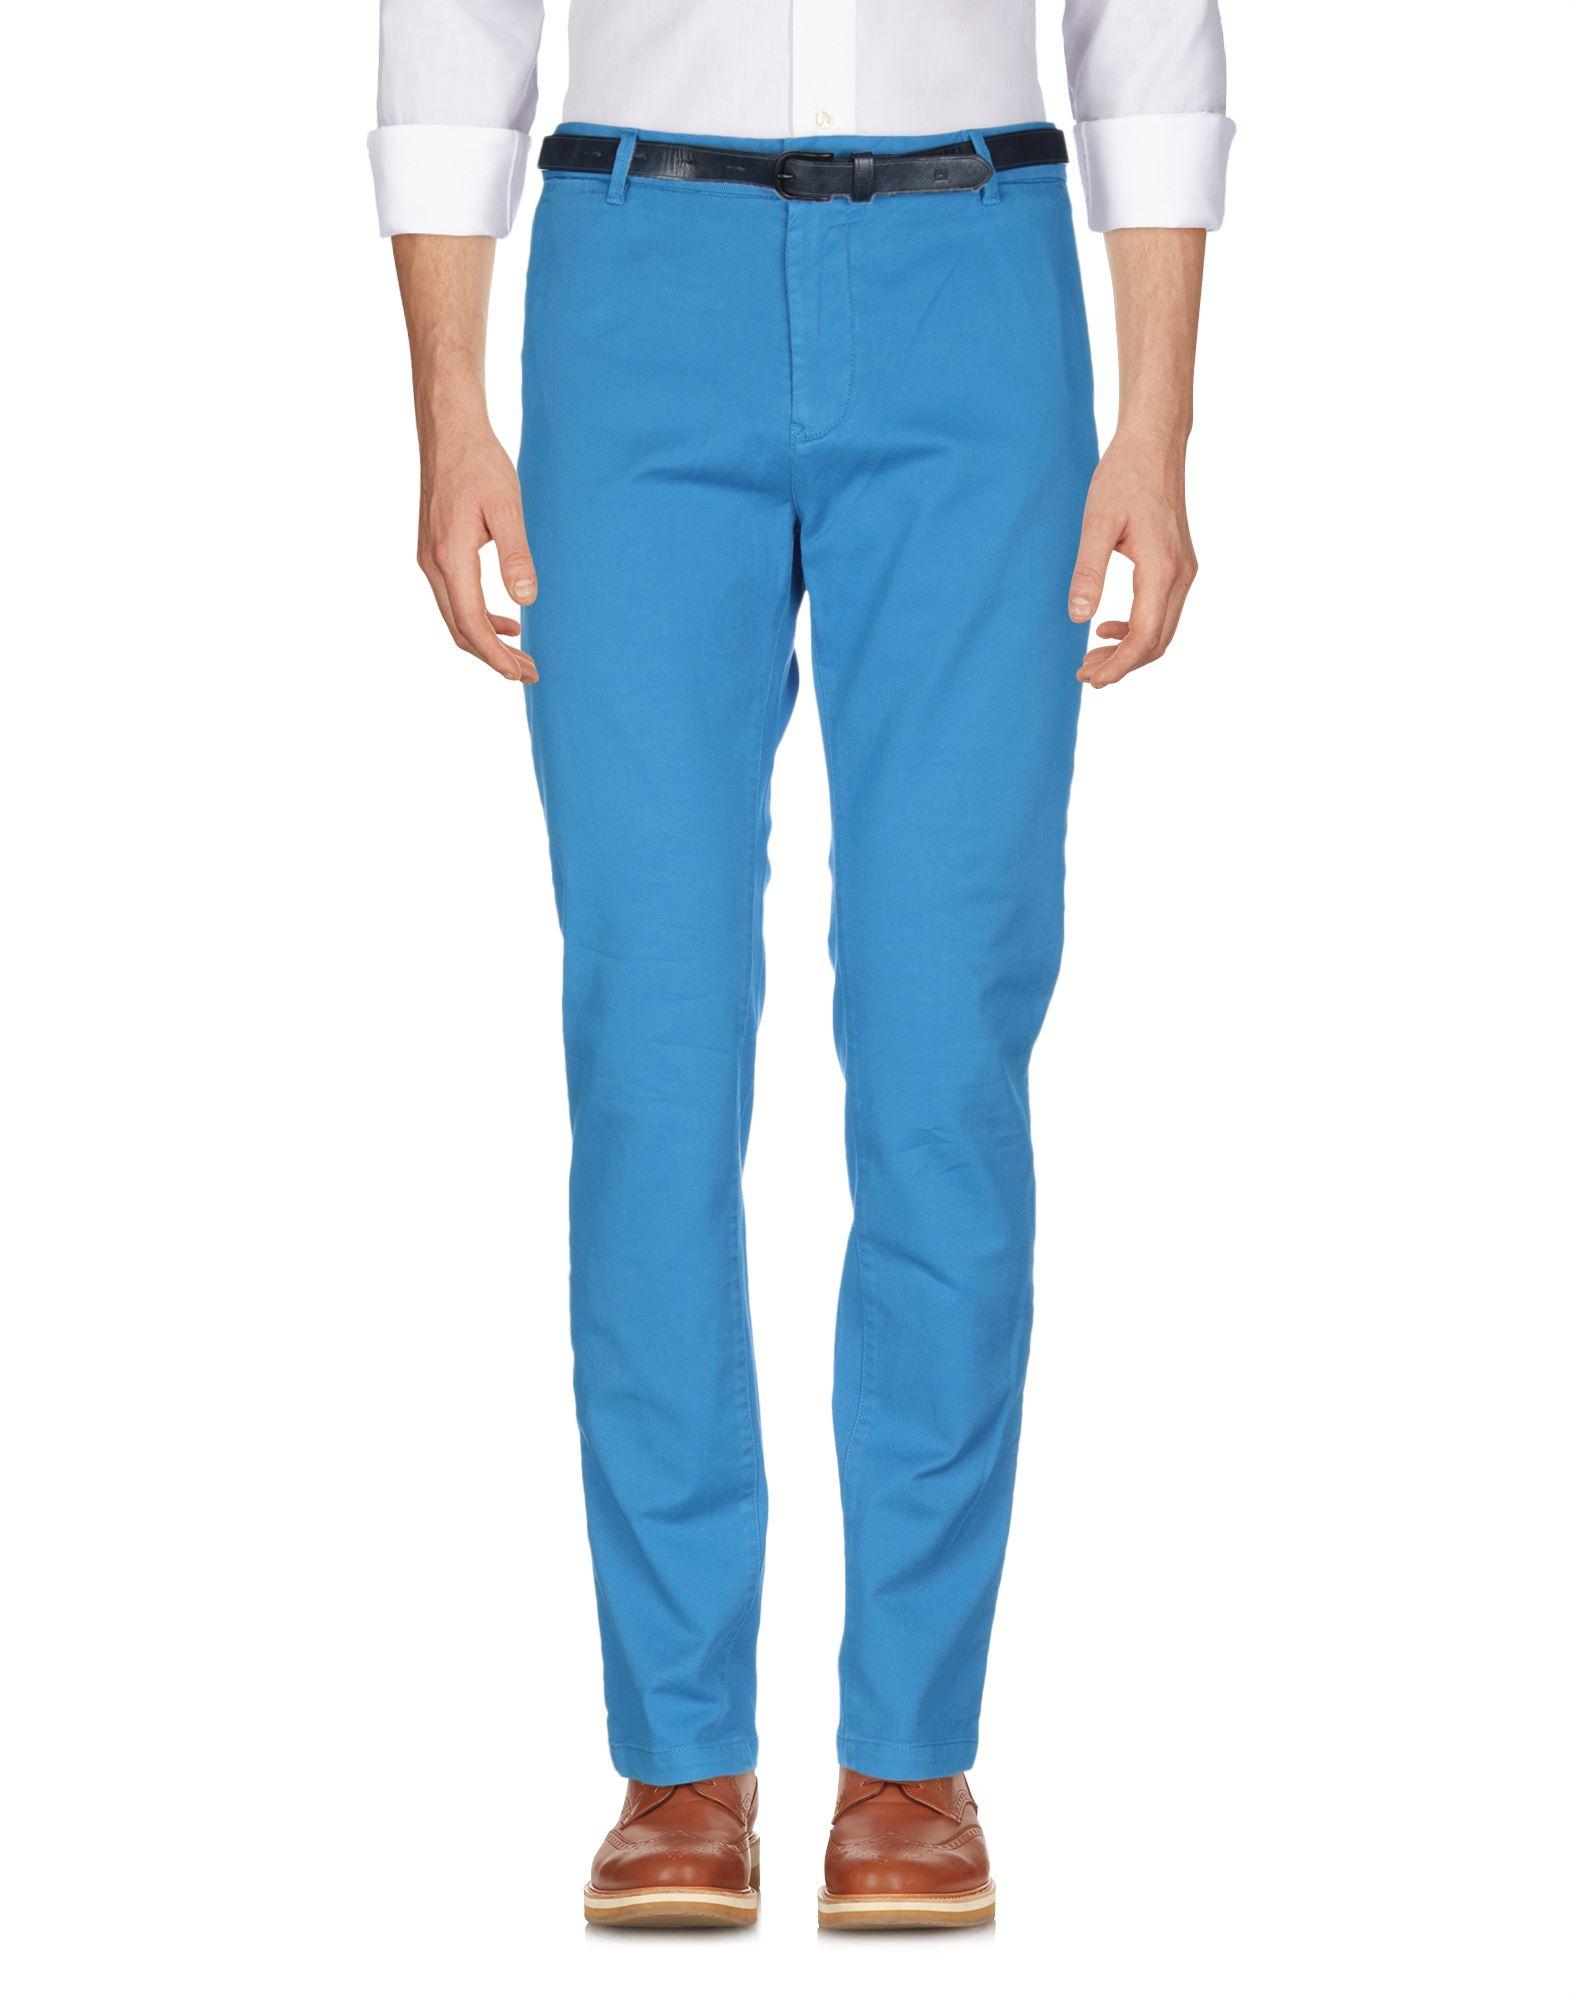 Scotch & Soda Cotton Casual Trouser in Azure (Blue) for Men - Lyst